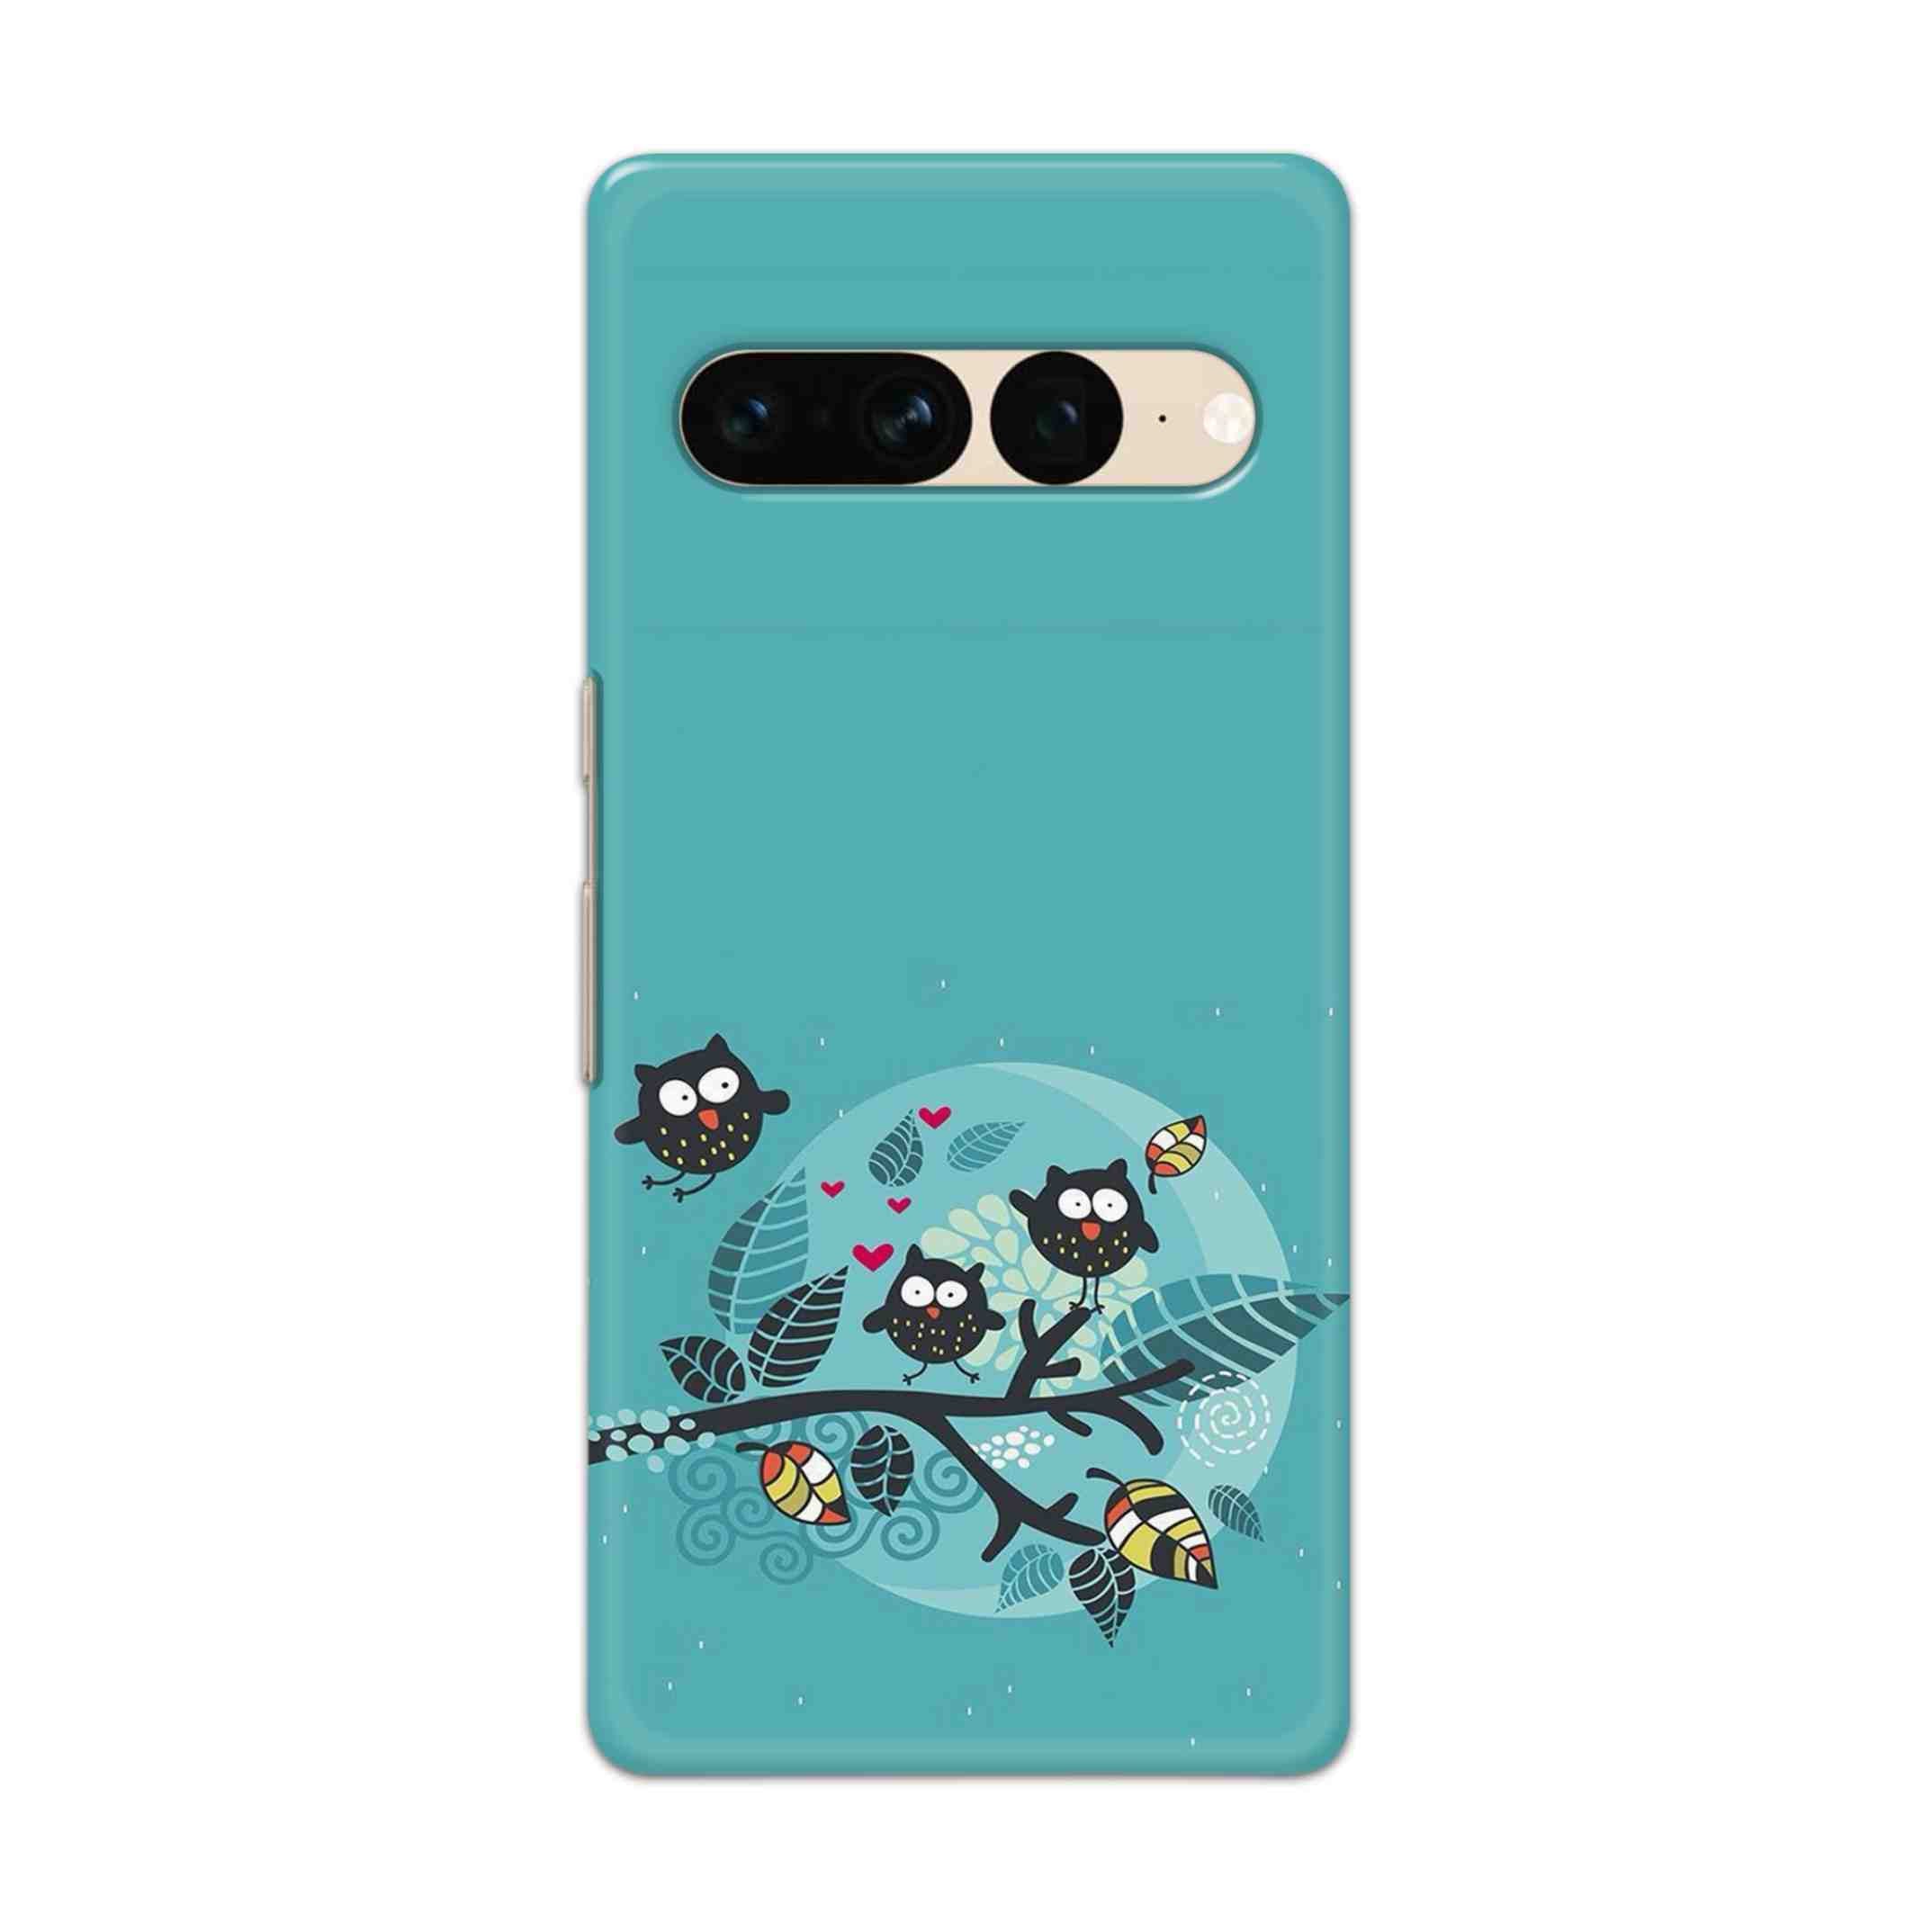 Buy Owl Hard Back Mobile Phone Case Cover For Google Pixel 7 Pro Online